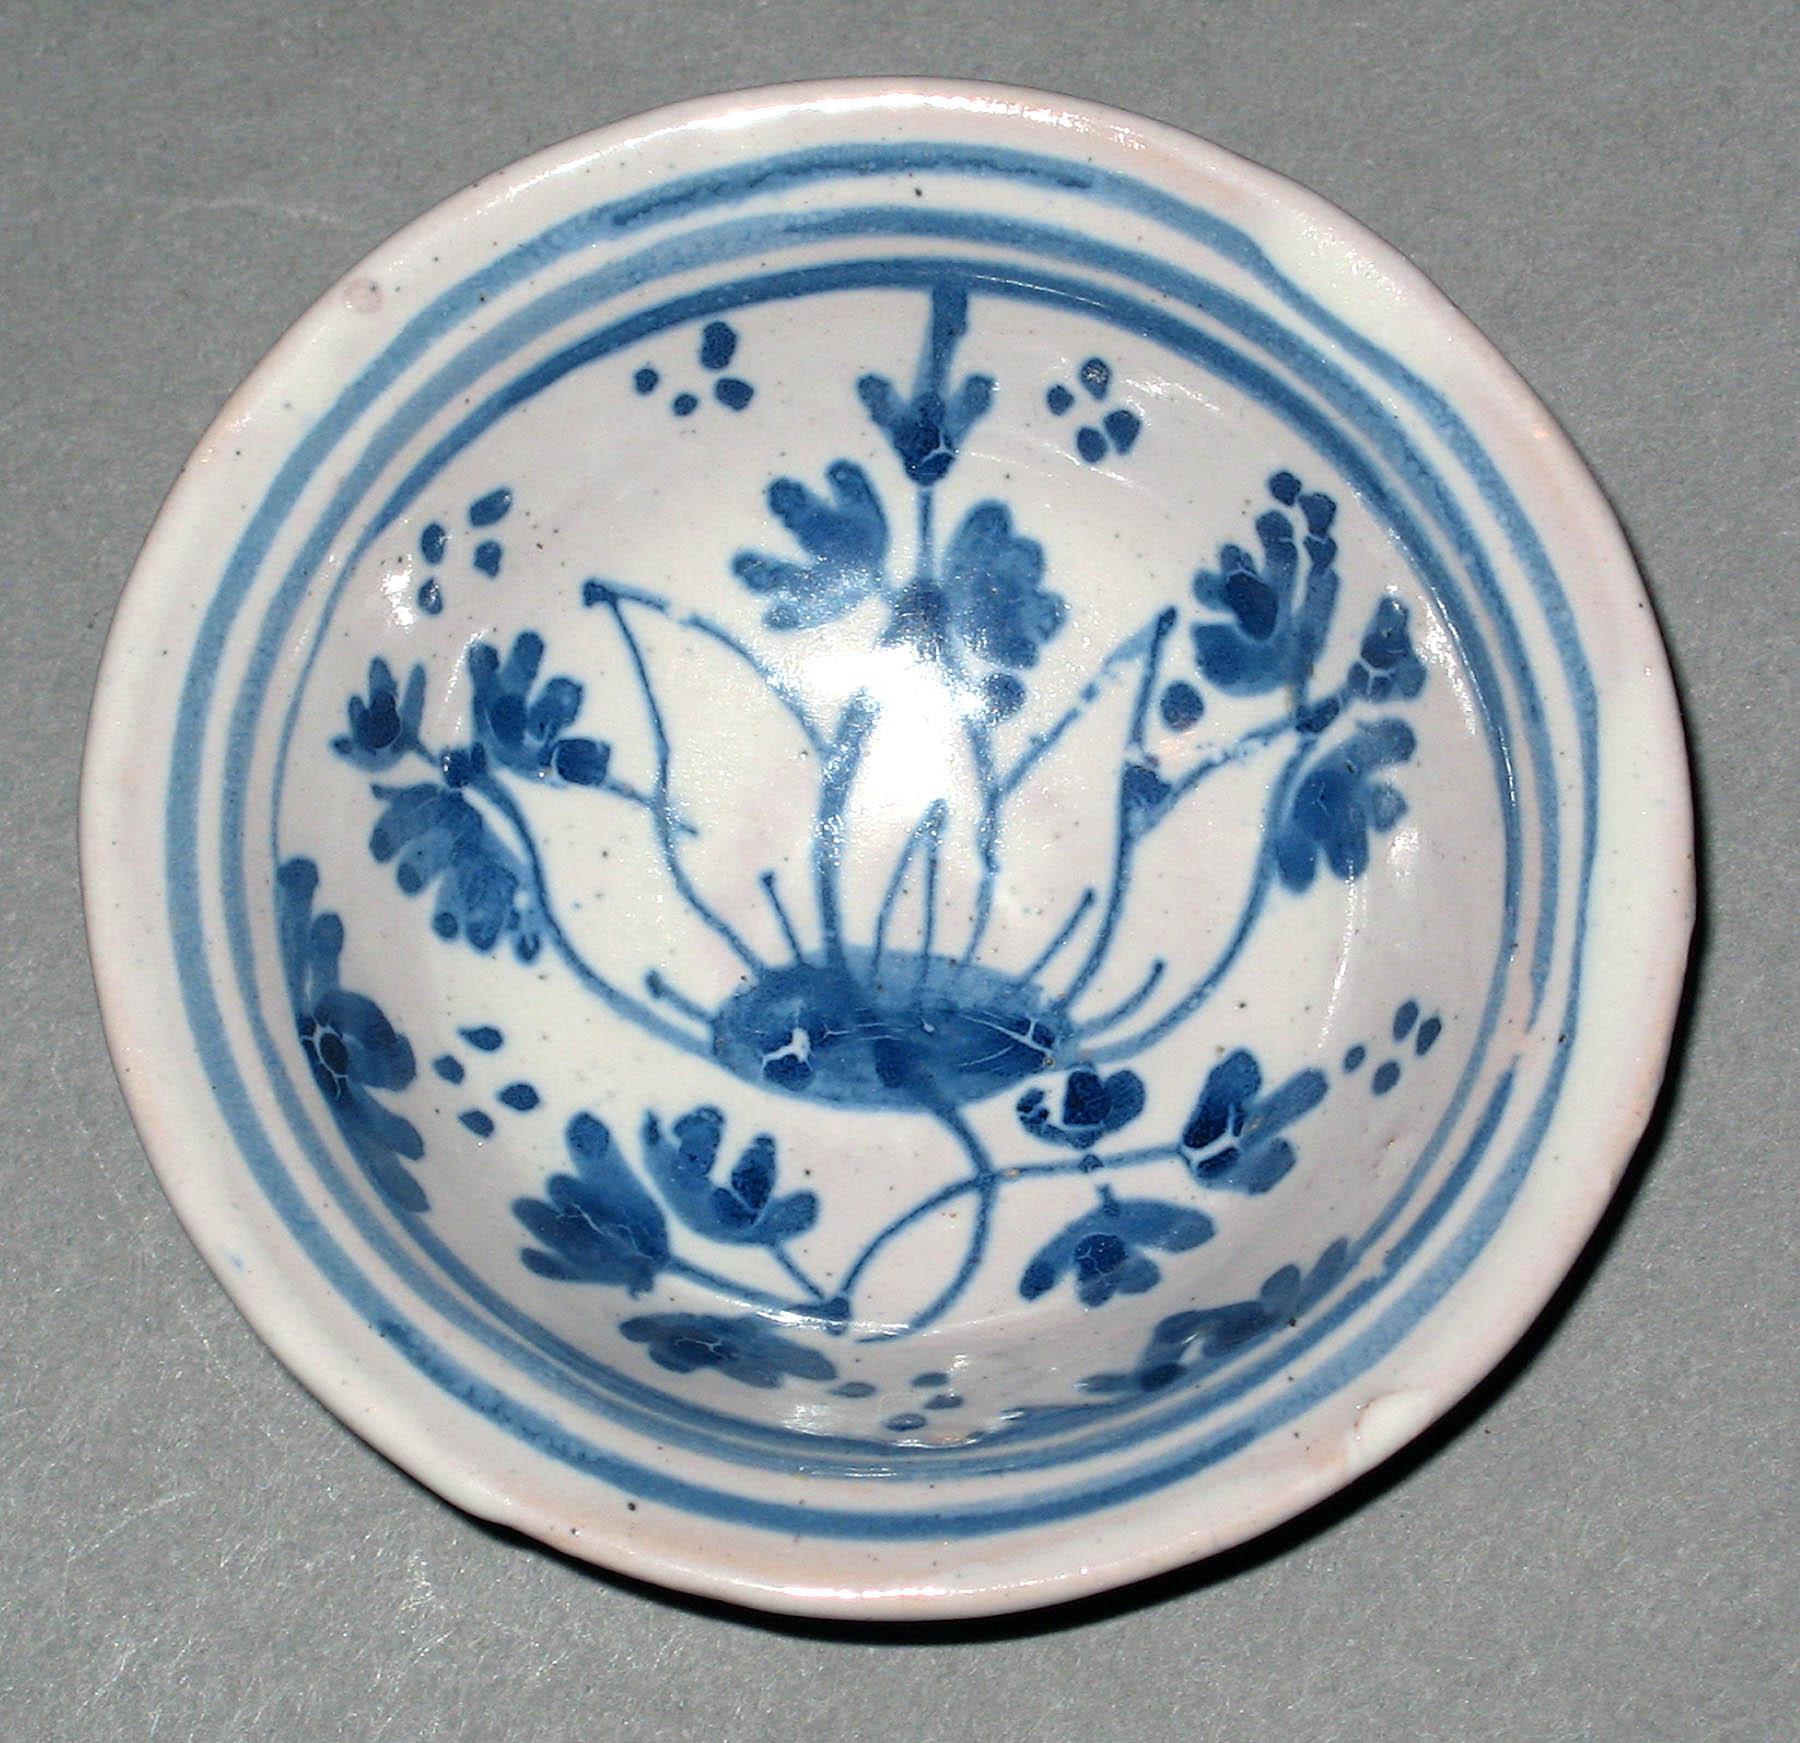 1958.1537 Earthenware dish